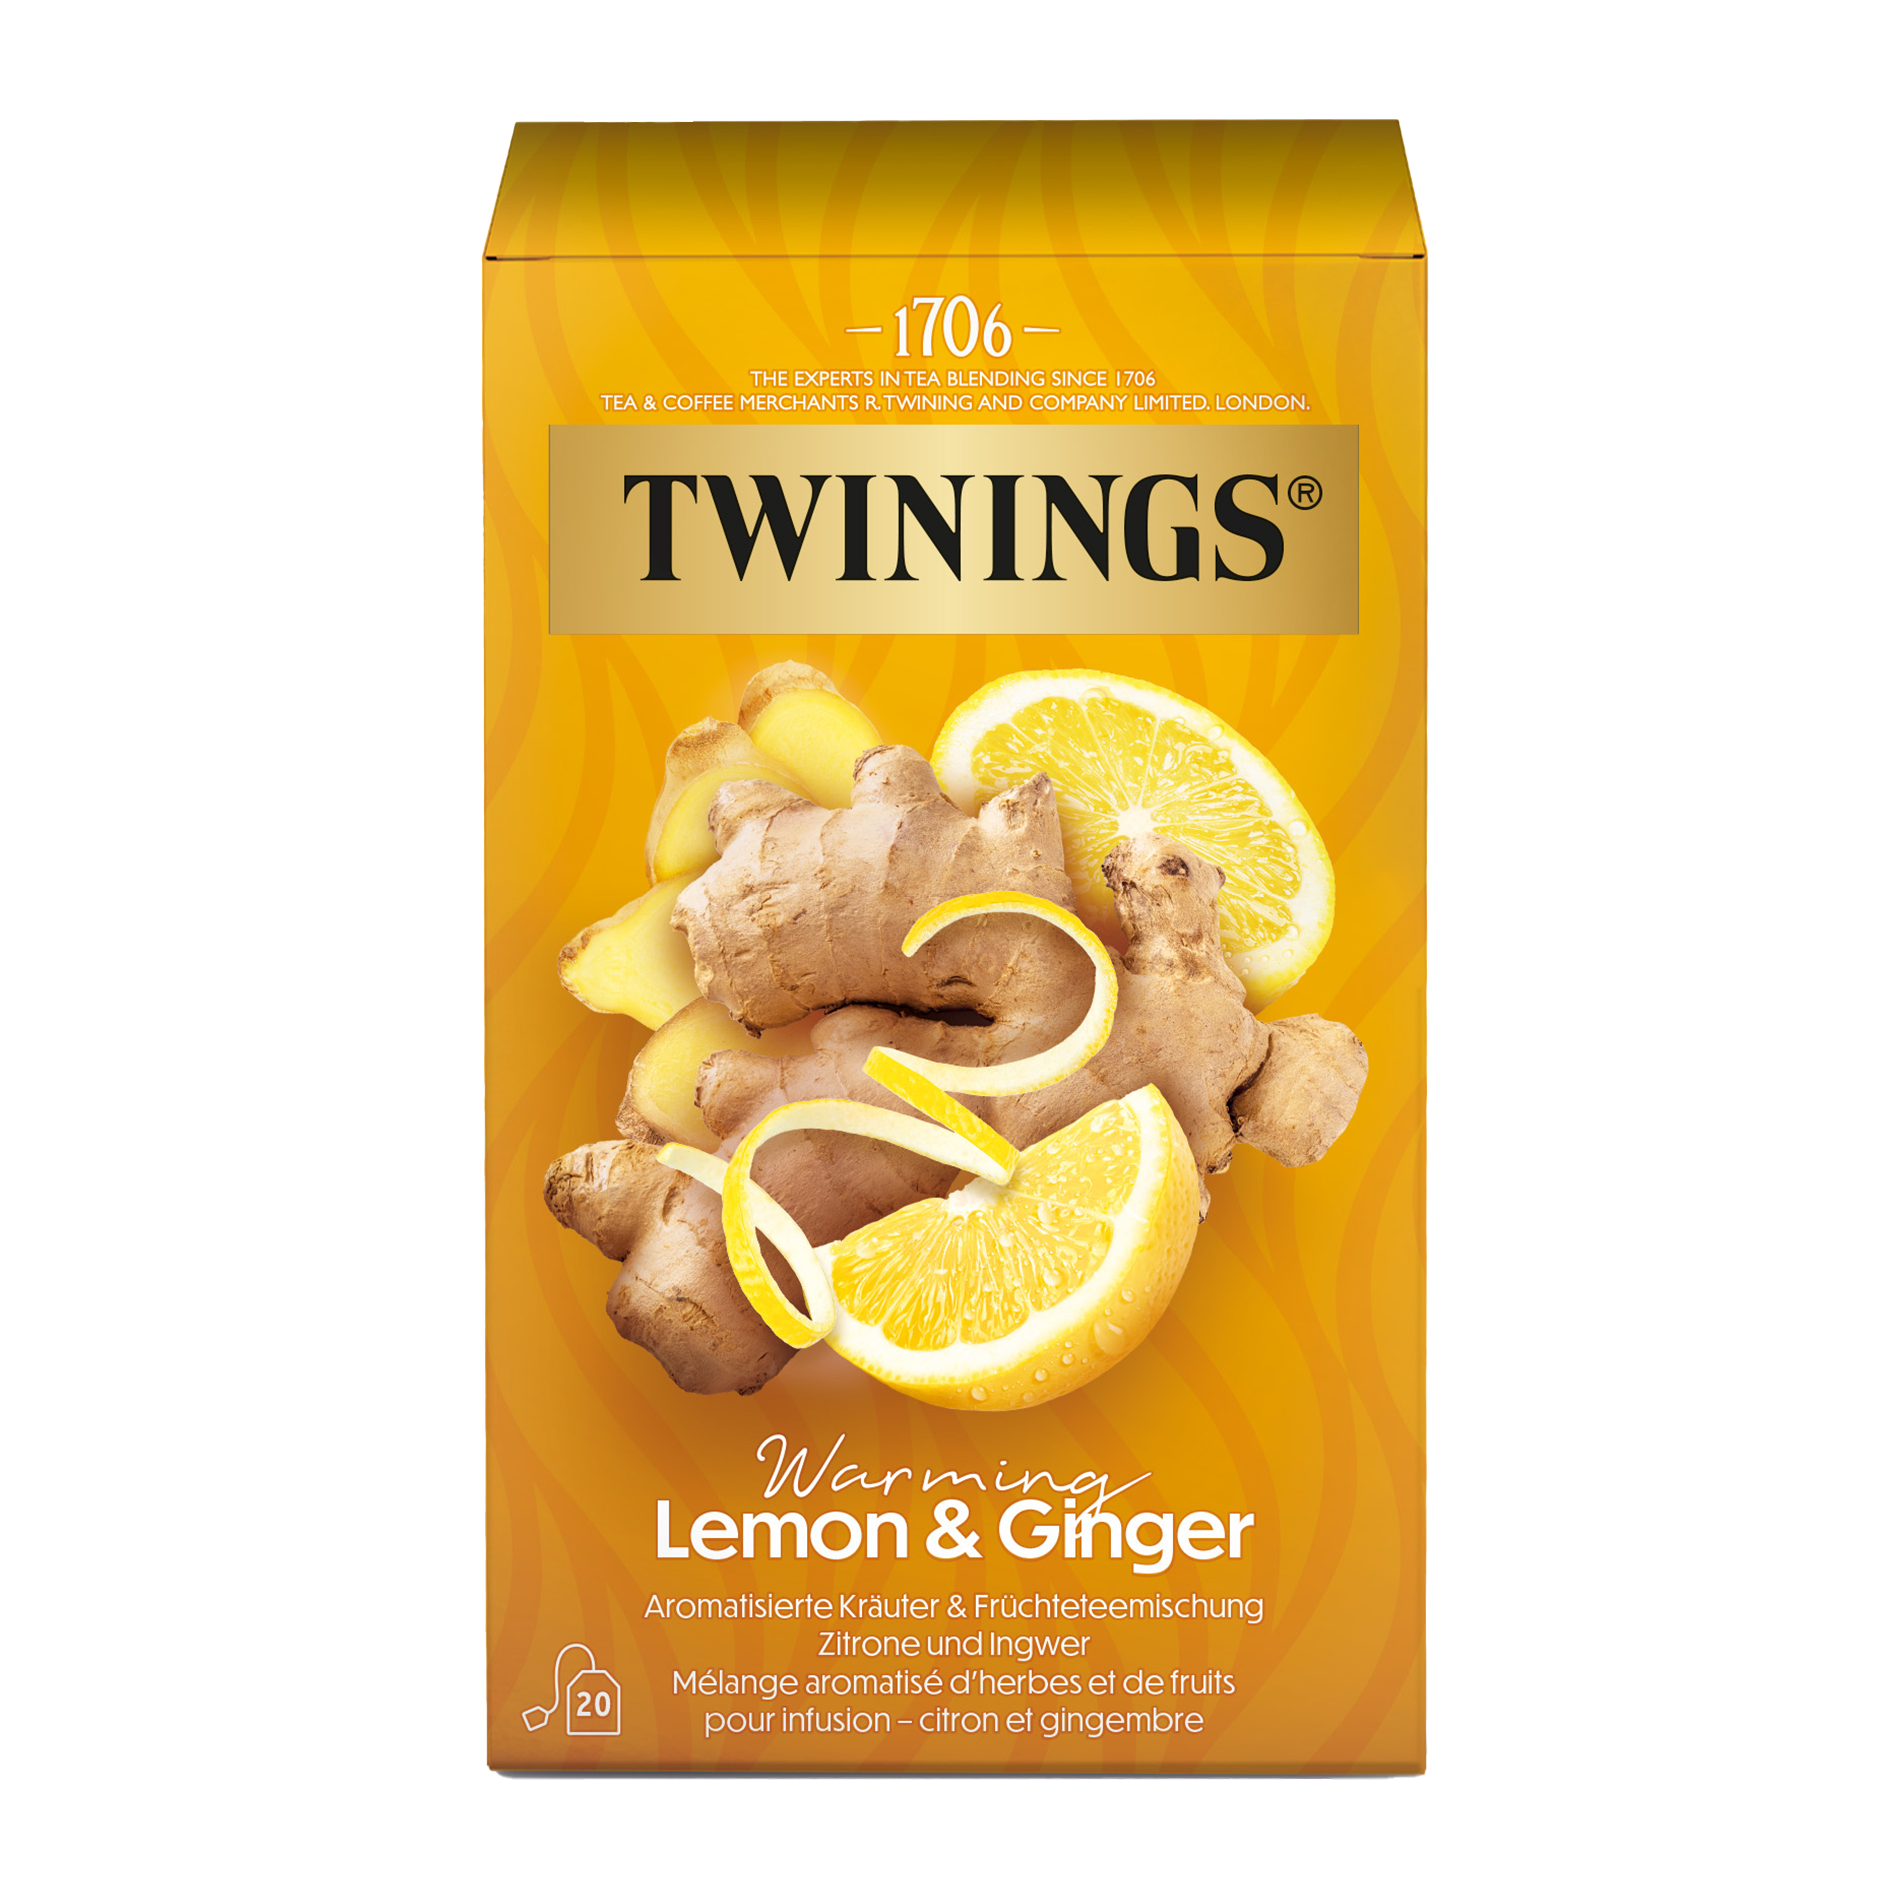  Lemon & Ginger - der prickelnde Kräutertee